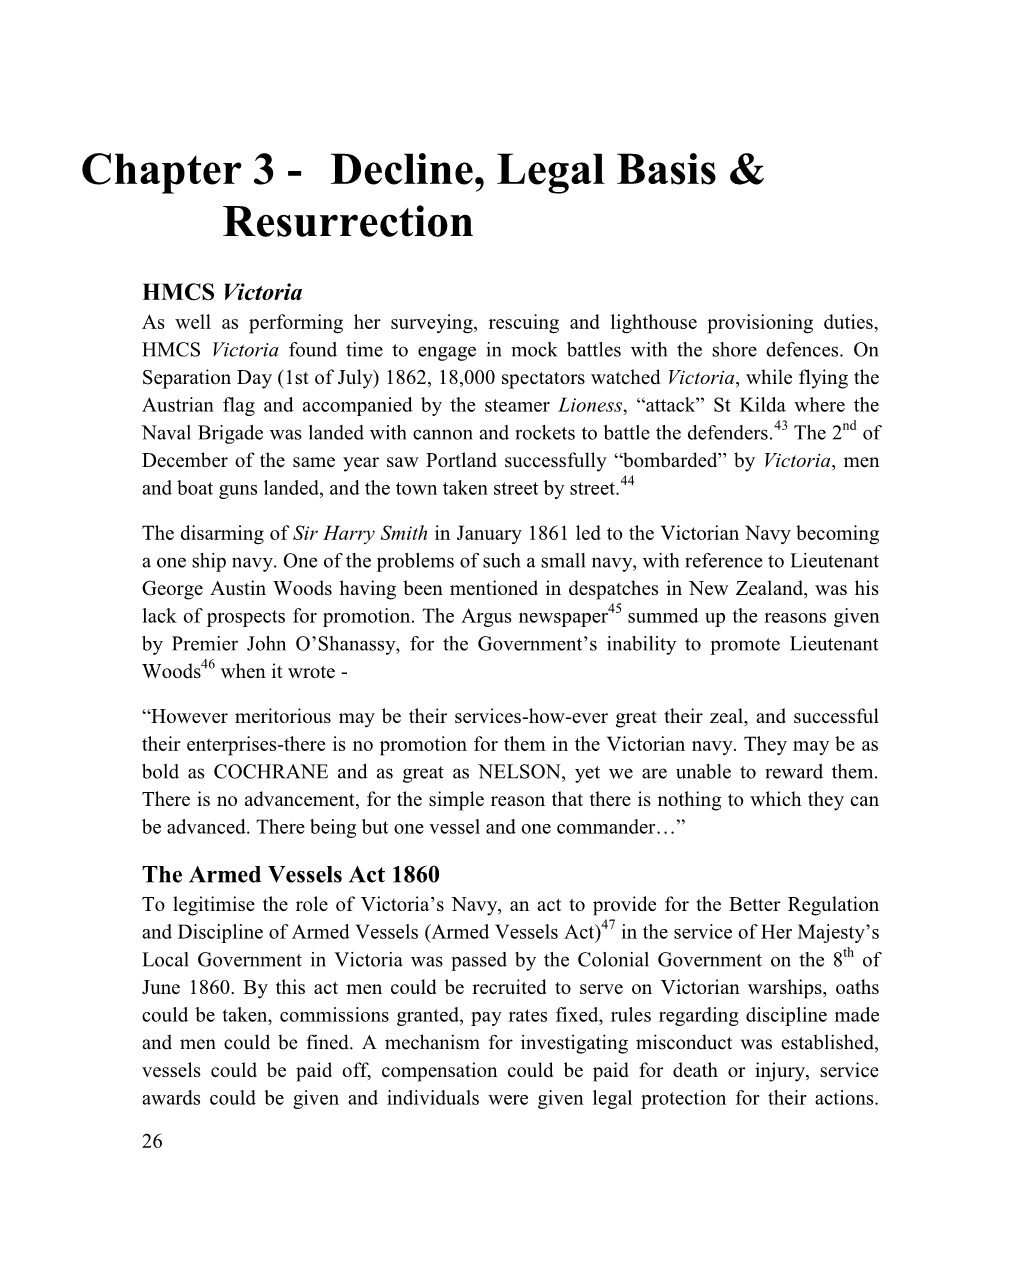 Decline, Legal Basis & Resurrection